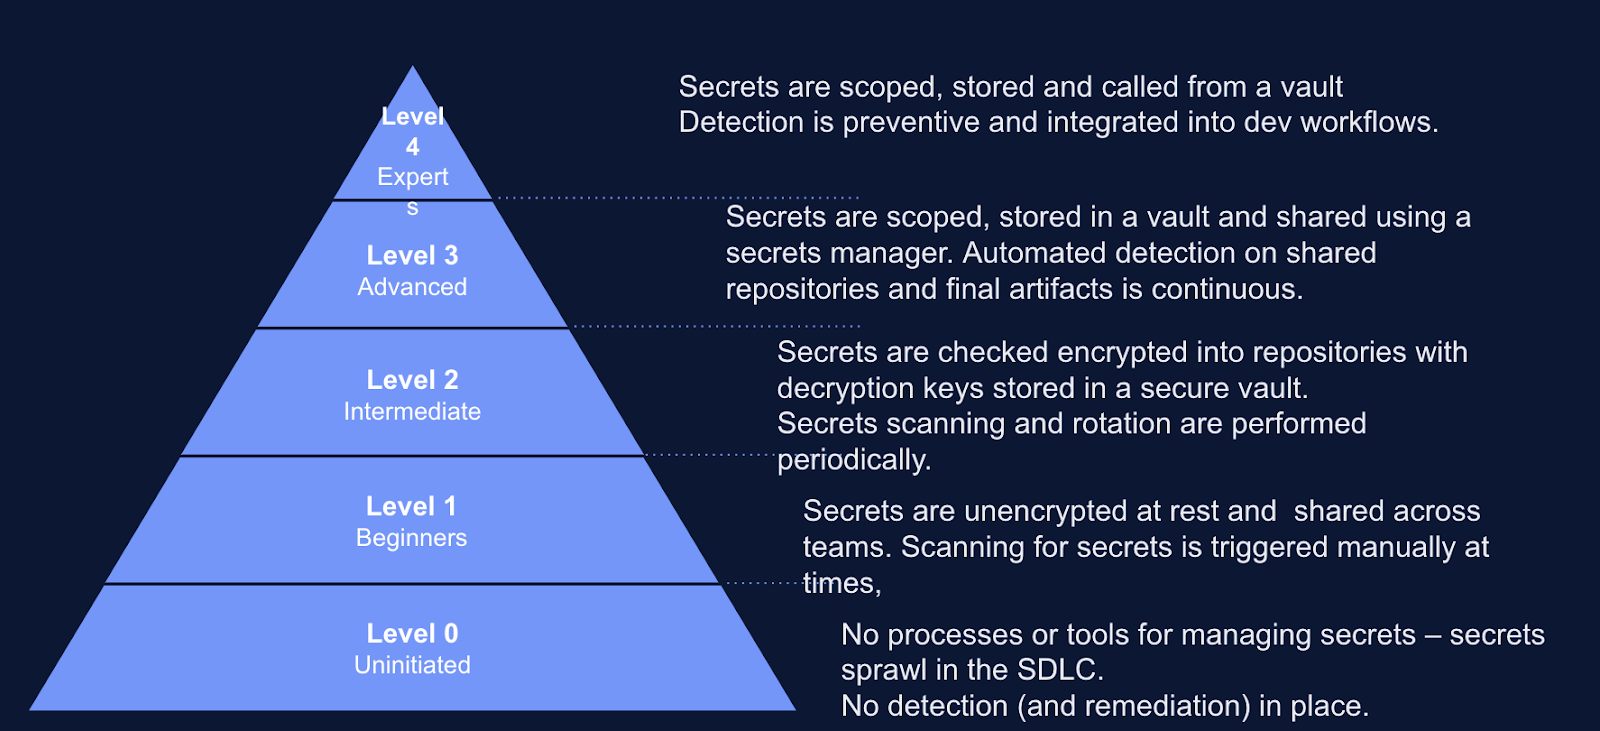 The secrets management maturity model 5 levels pyramid.